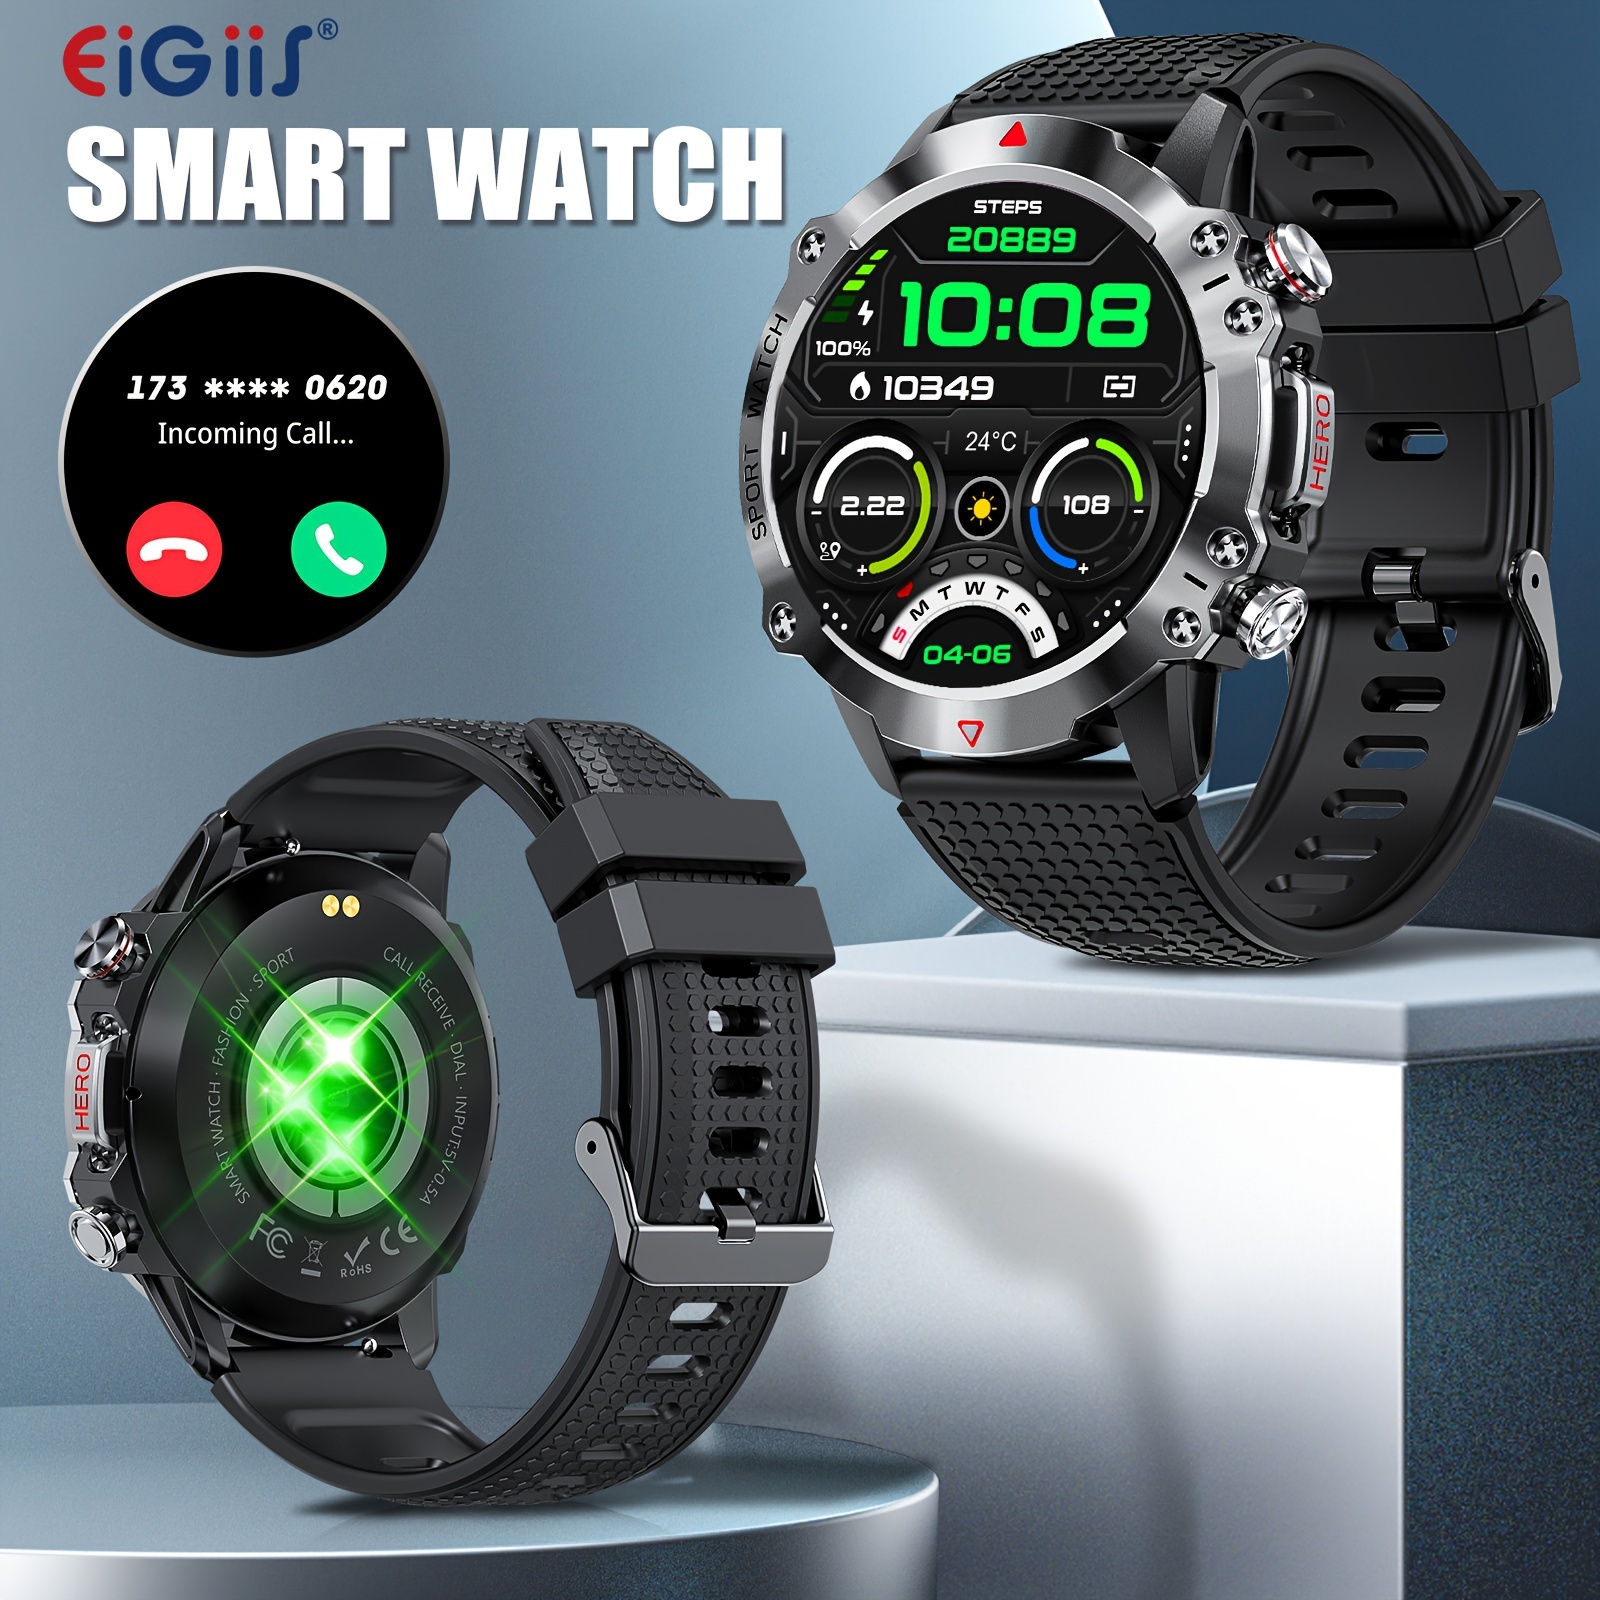 BES-33853 - Smartwatch - beselettronica - Orologio Smartwatch Uomo